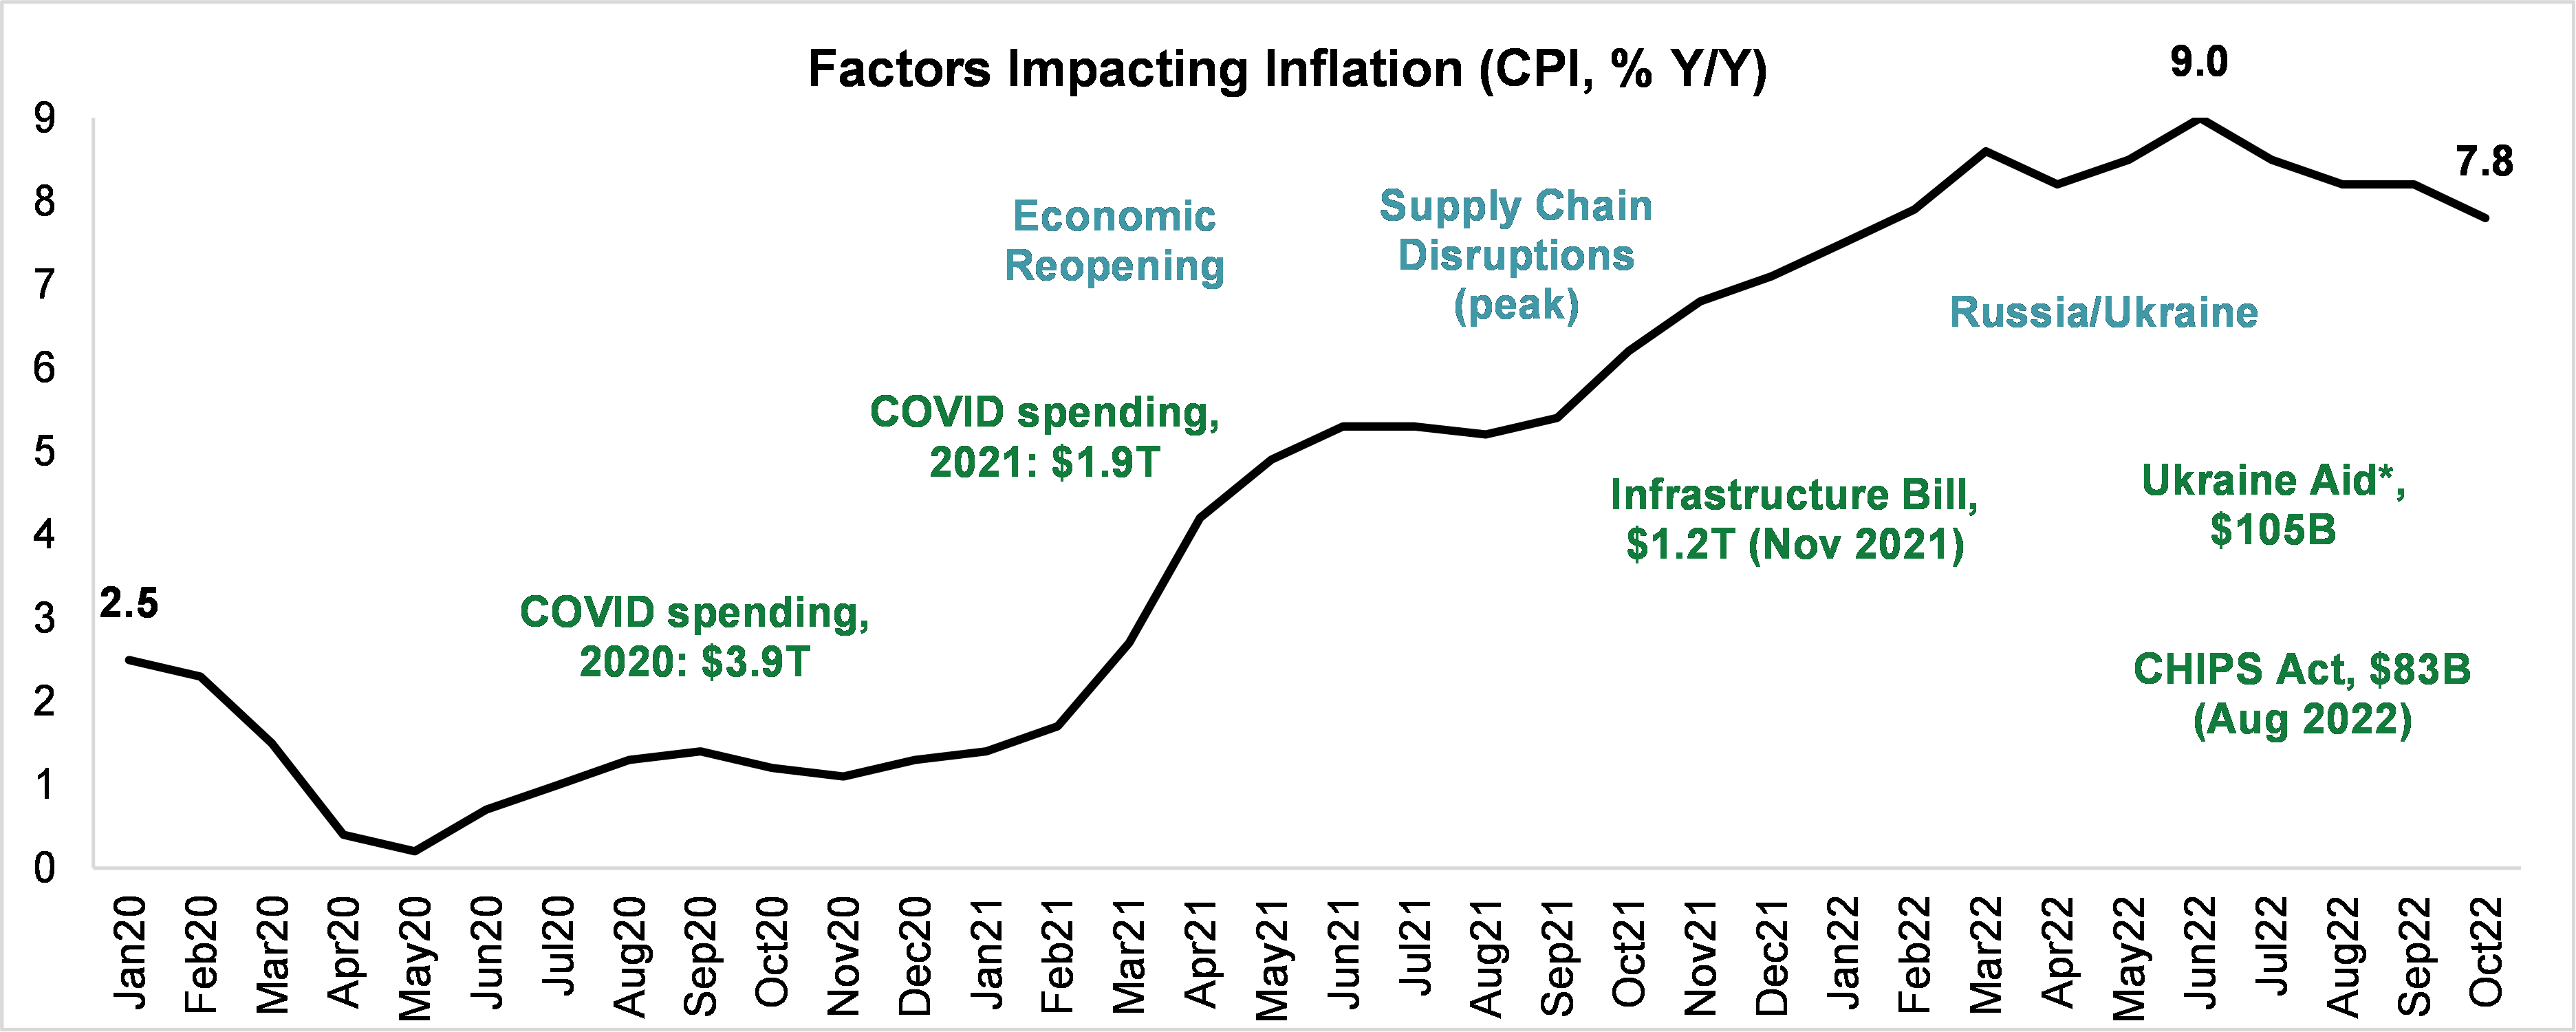 Factors Impacting Inflation